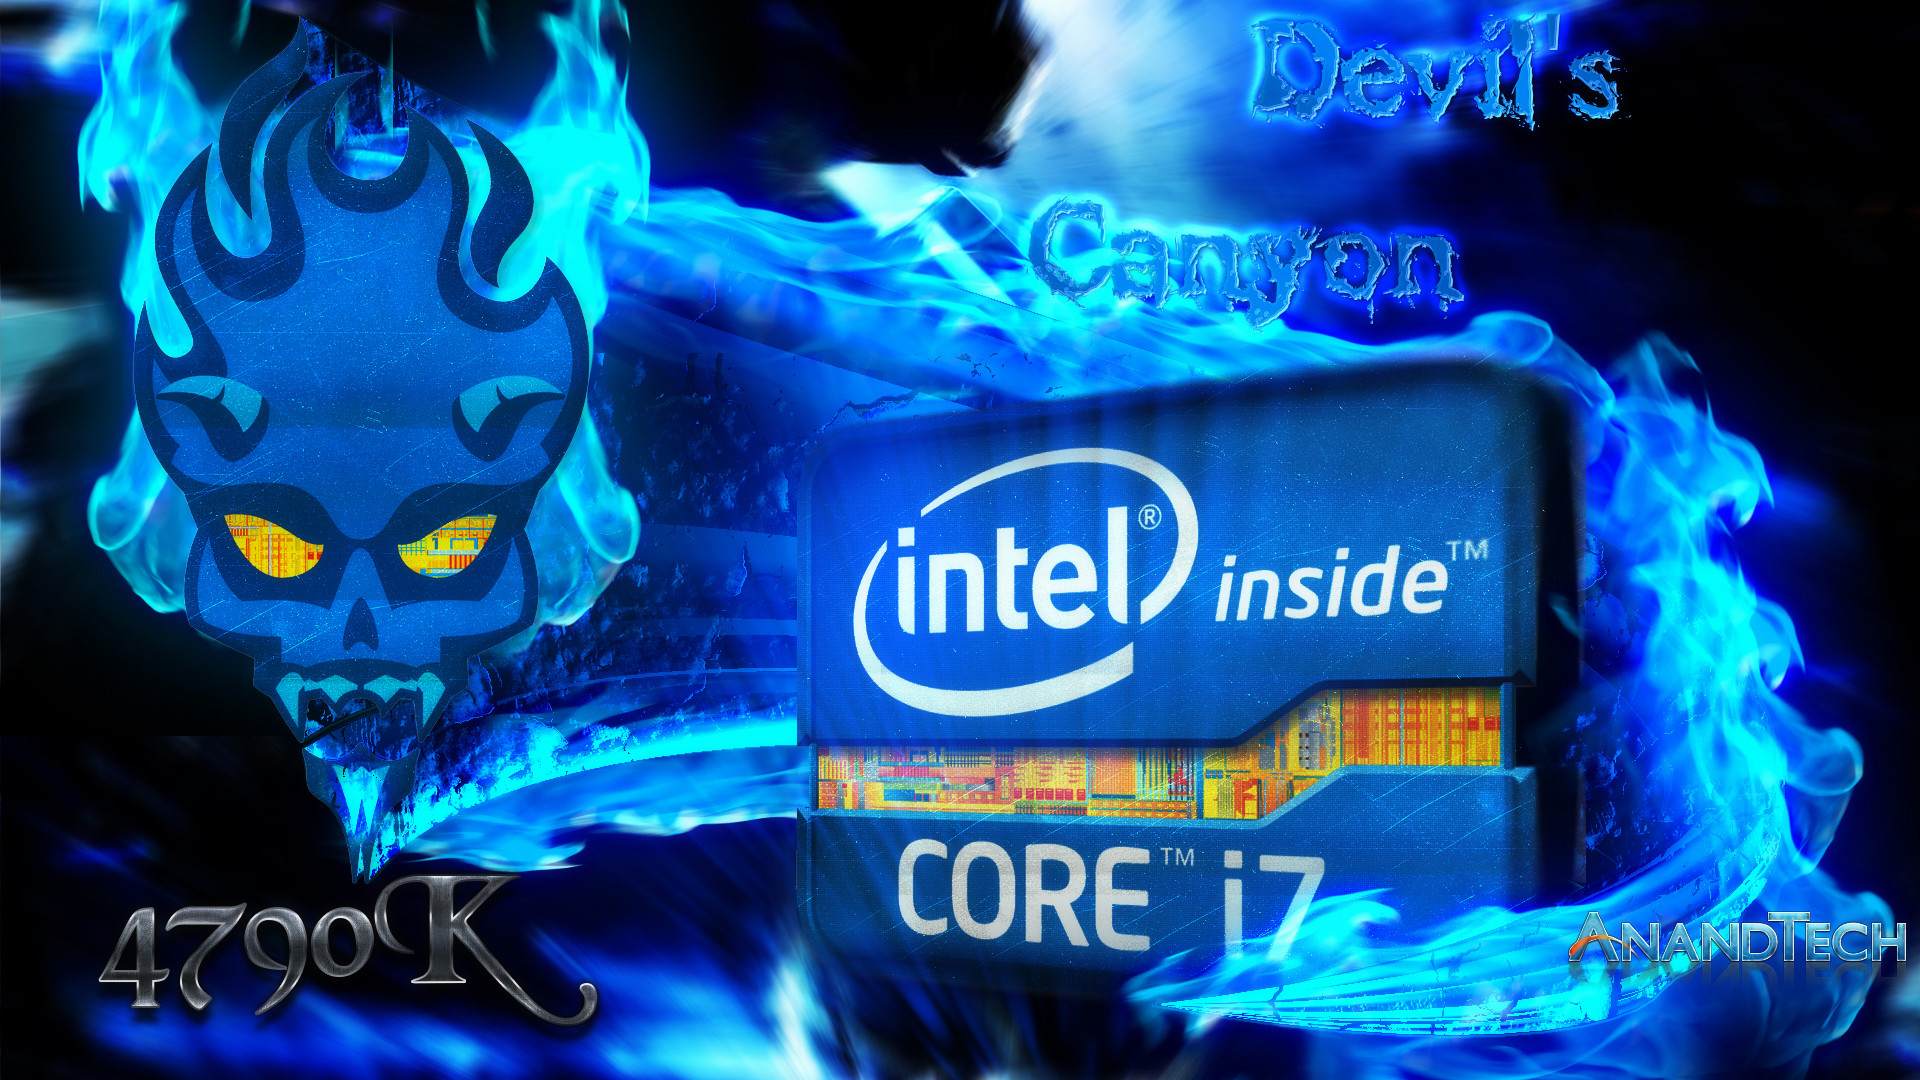 Intel Core I7 Wallpaper 4790k Devil S